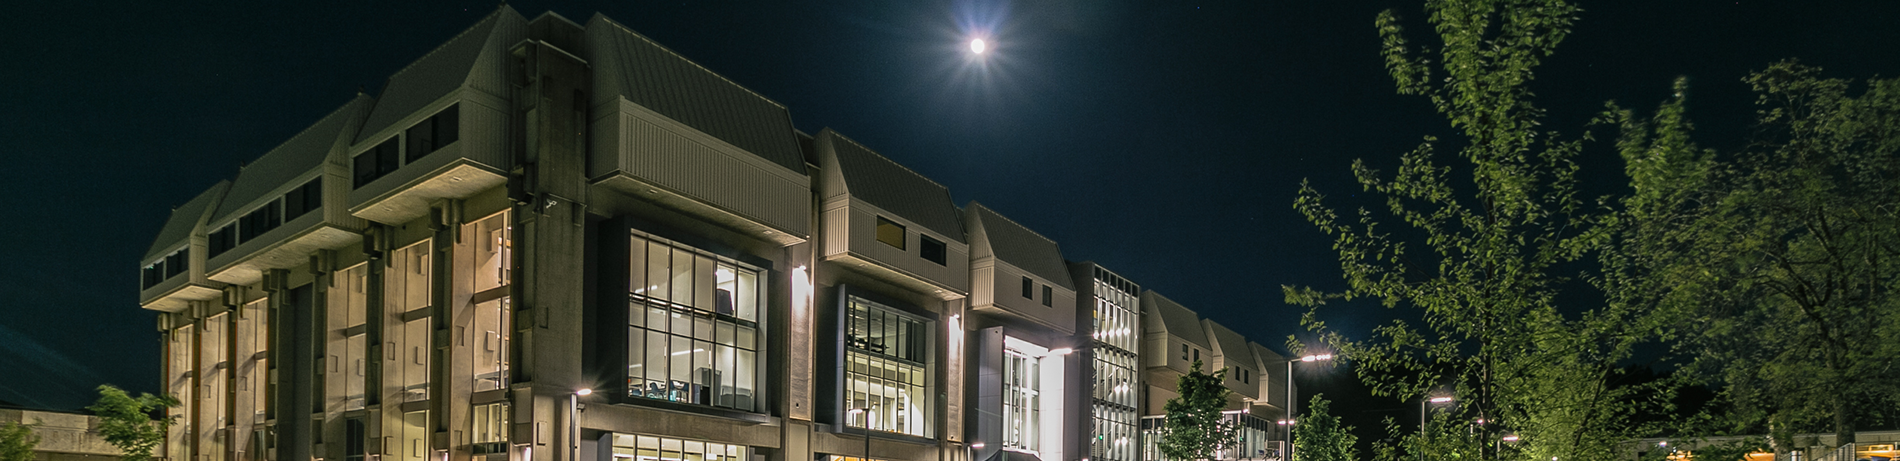 center building at night